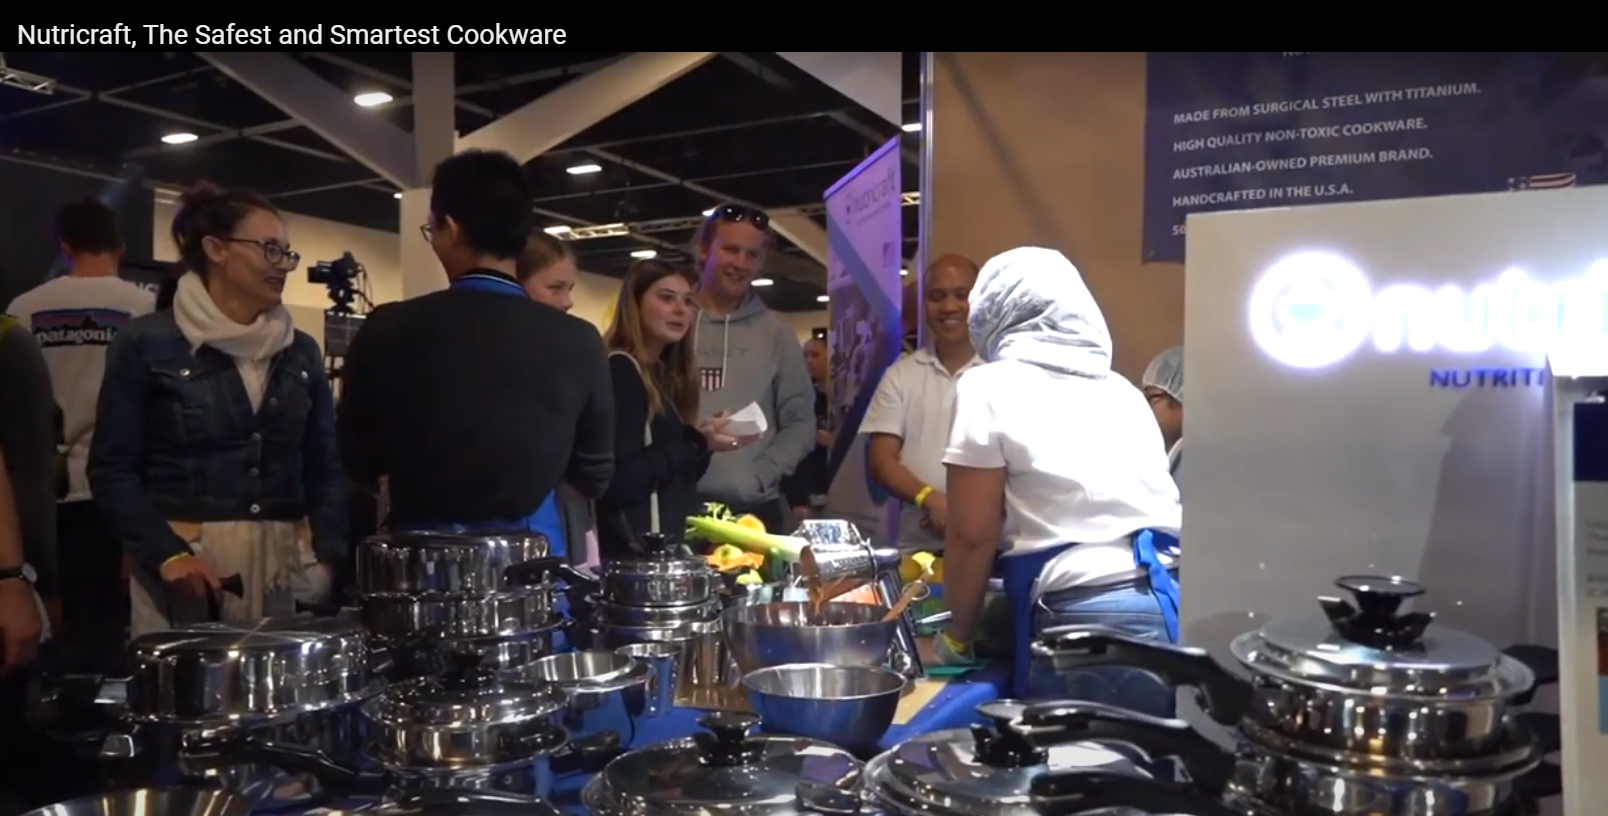 Load video: Nutricraft, The Safest and Smartest Cookware